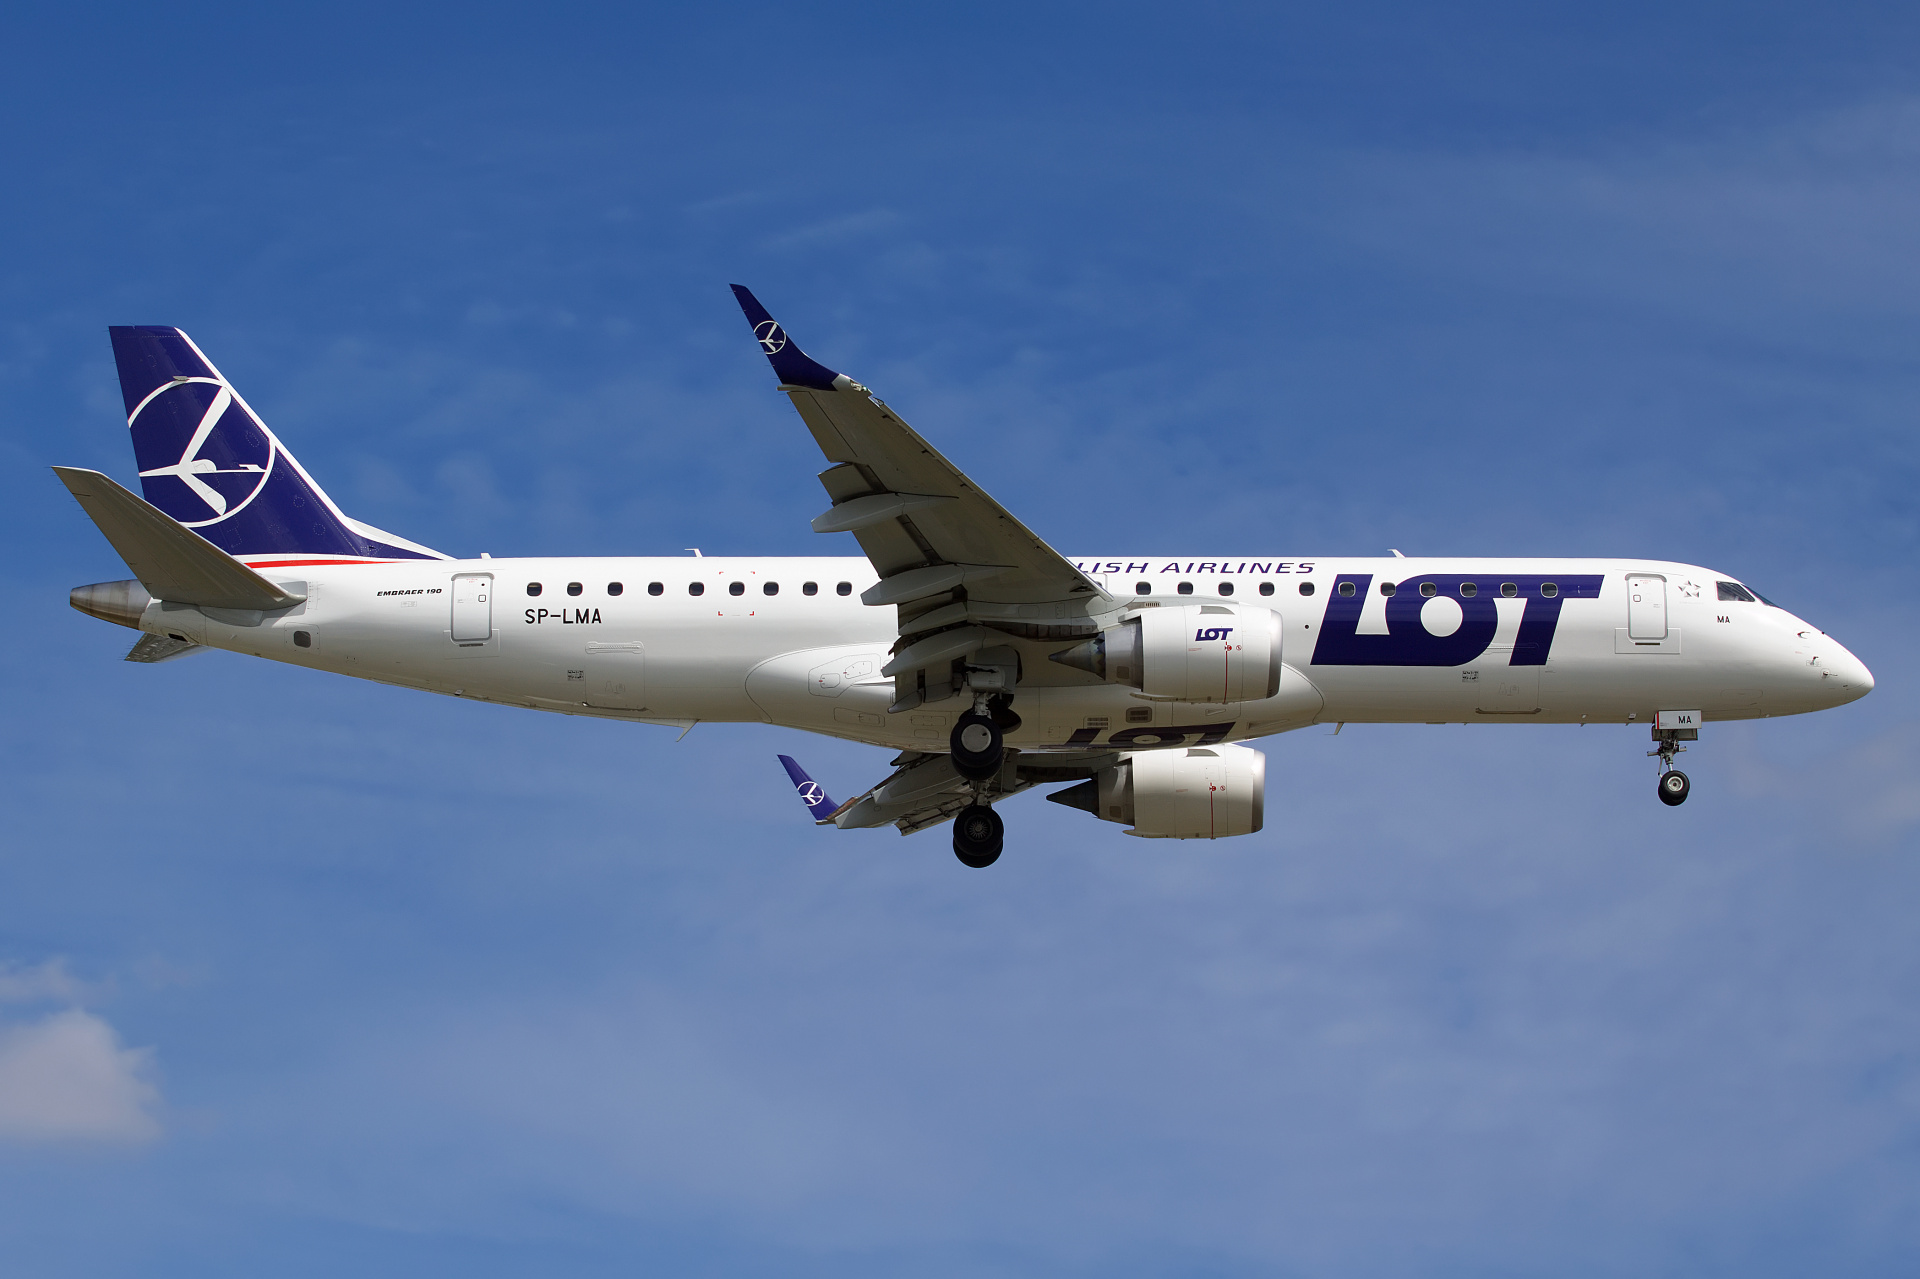 SP-LMA (Aircraft » EPWA Spotting » Embraer E190 » LOT Polish Airlines)